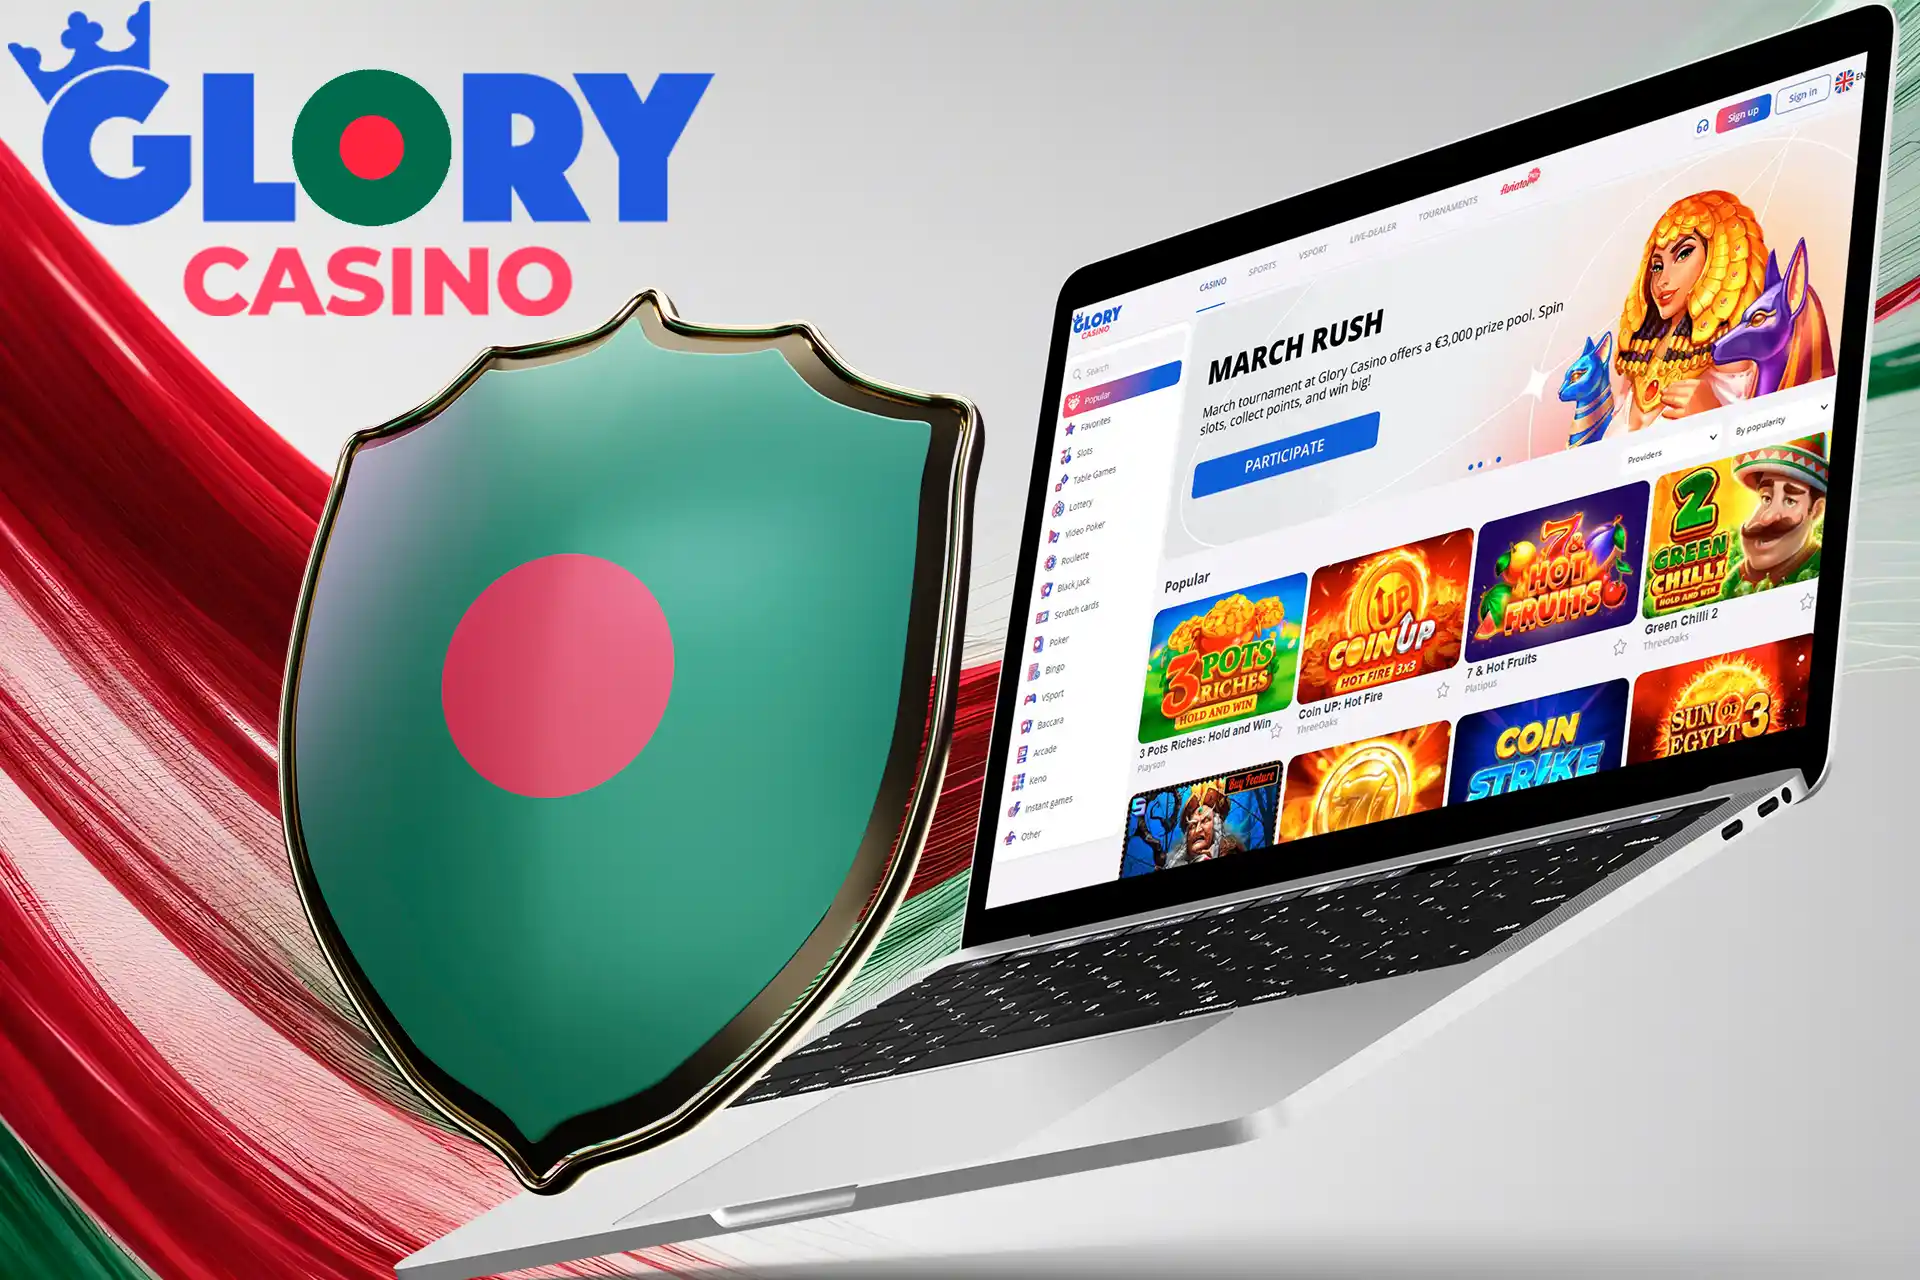 Glory Casino Bangladesh is a legal and safe casino